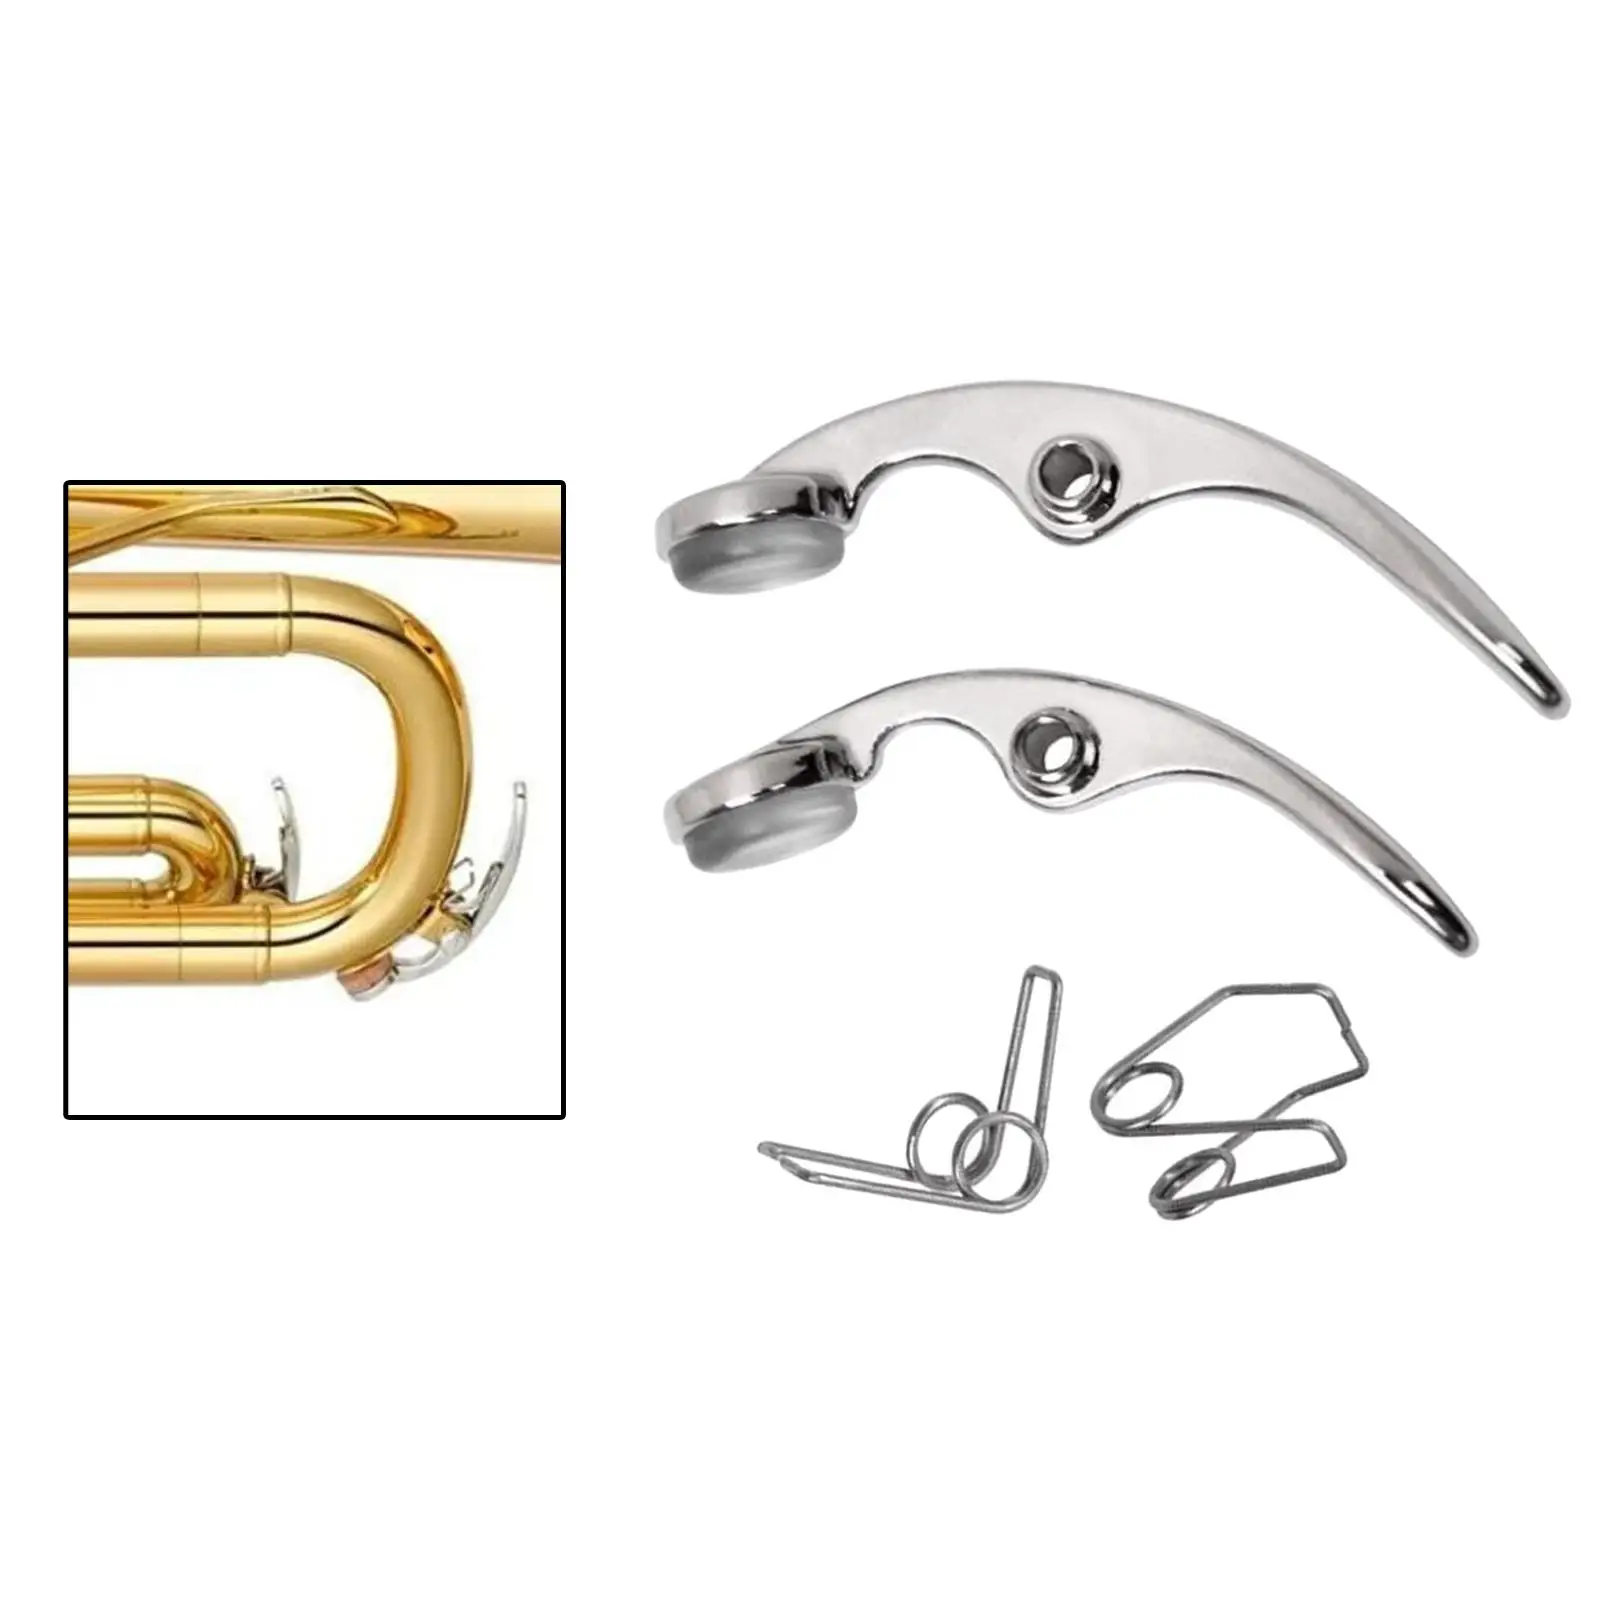 Trumpet Water Key Valve Repair Kits, Wind Instruments Accessory, Drain Valve Key